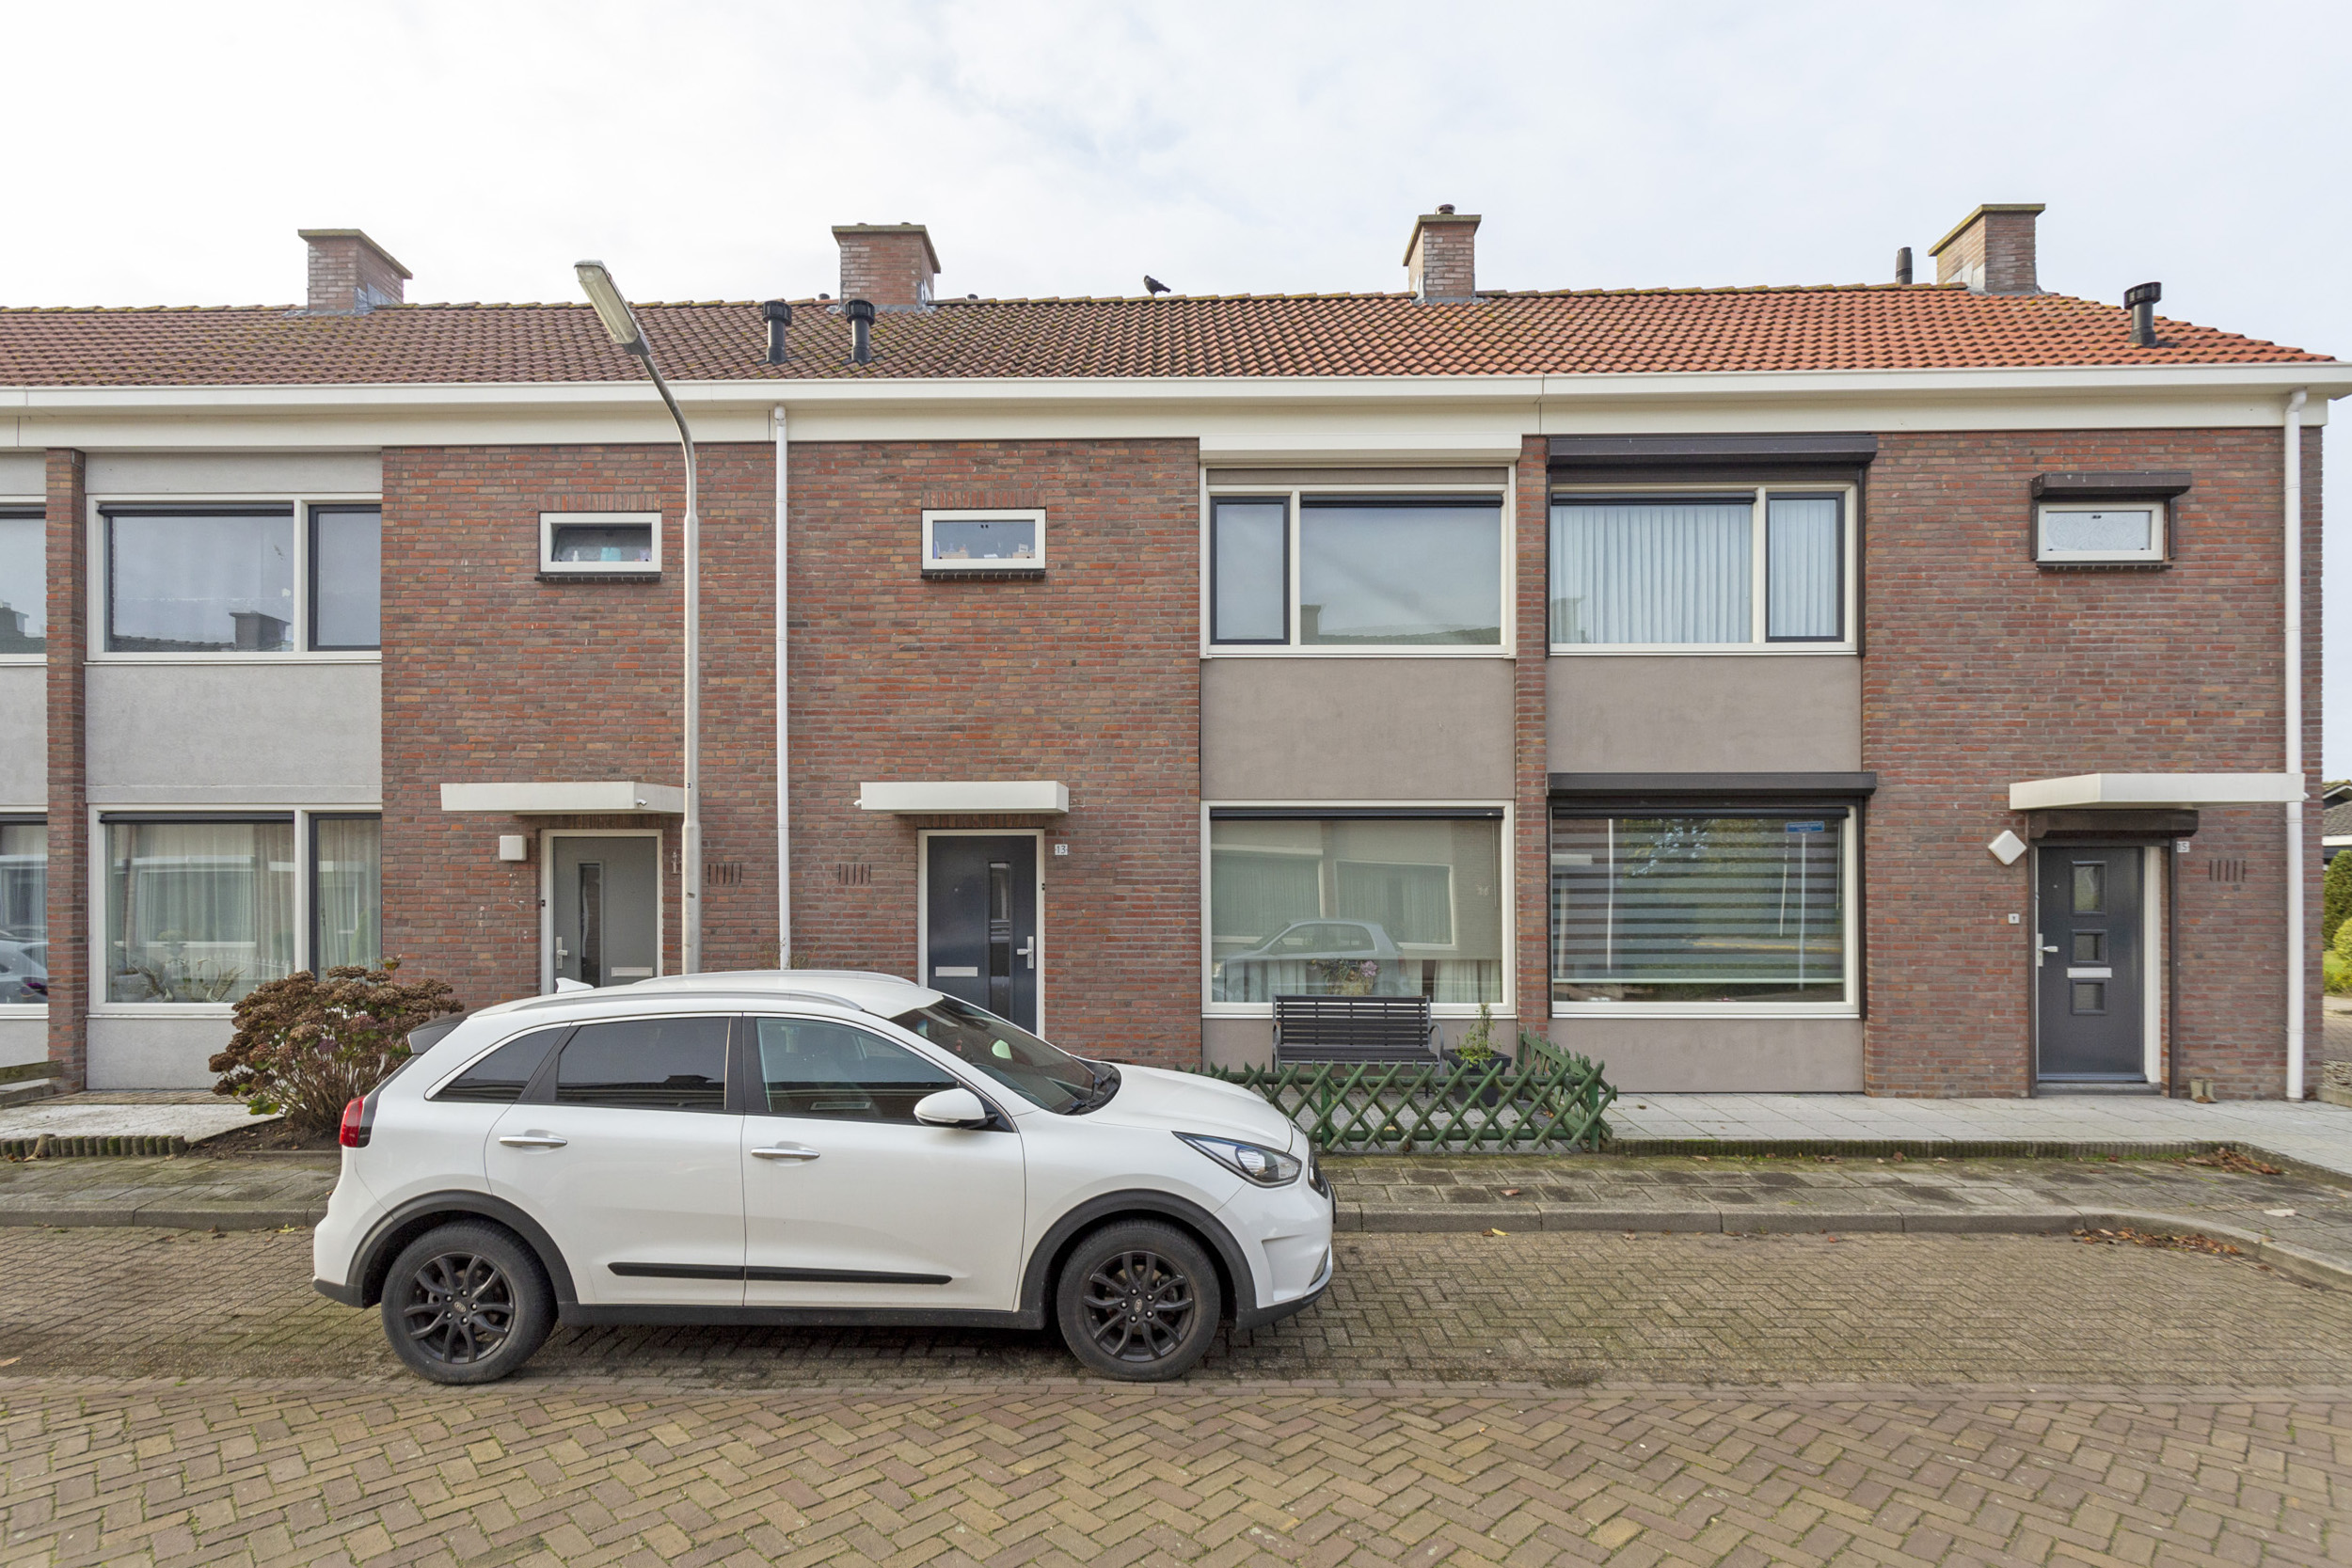 Pieter Breughelstraat 13, 4715 BB Rucphen, Nederland